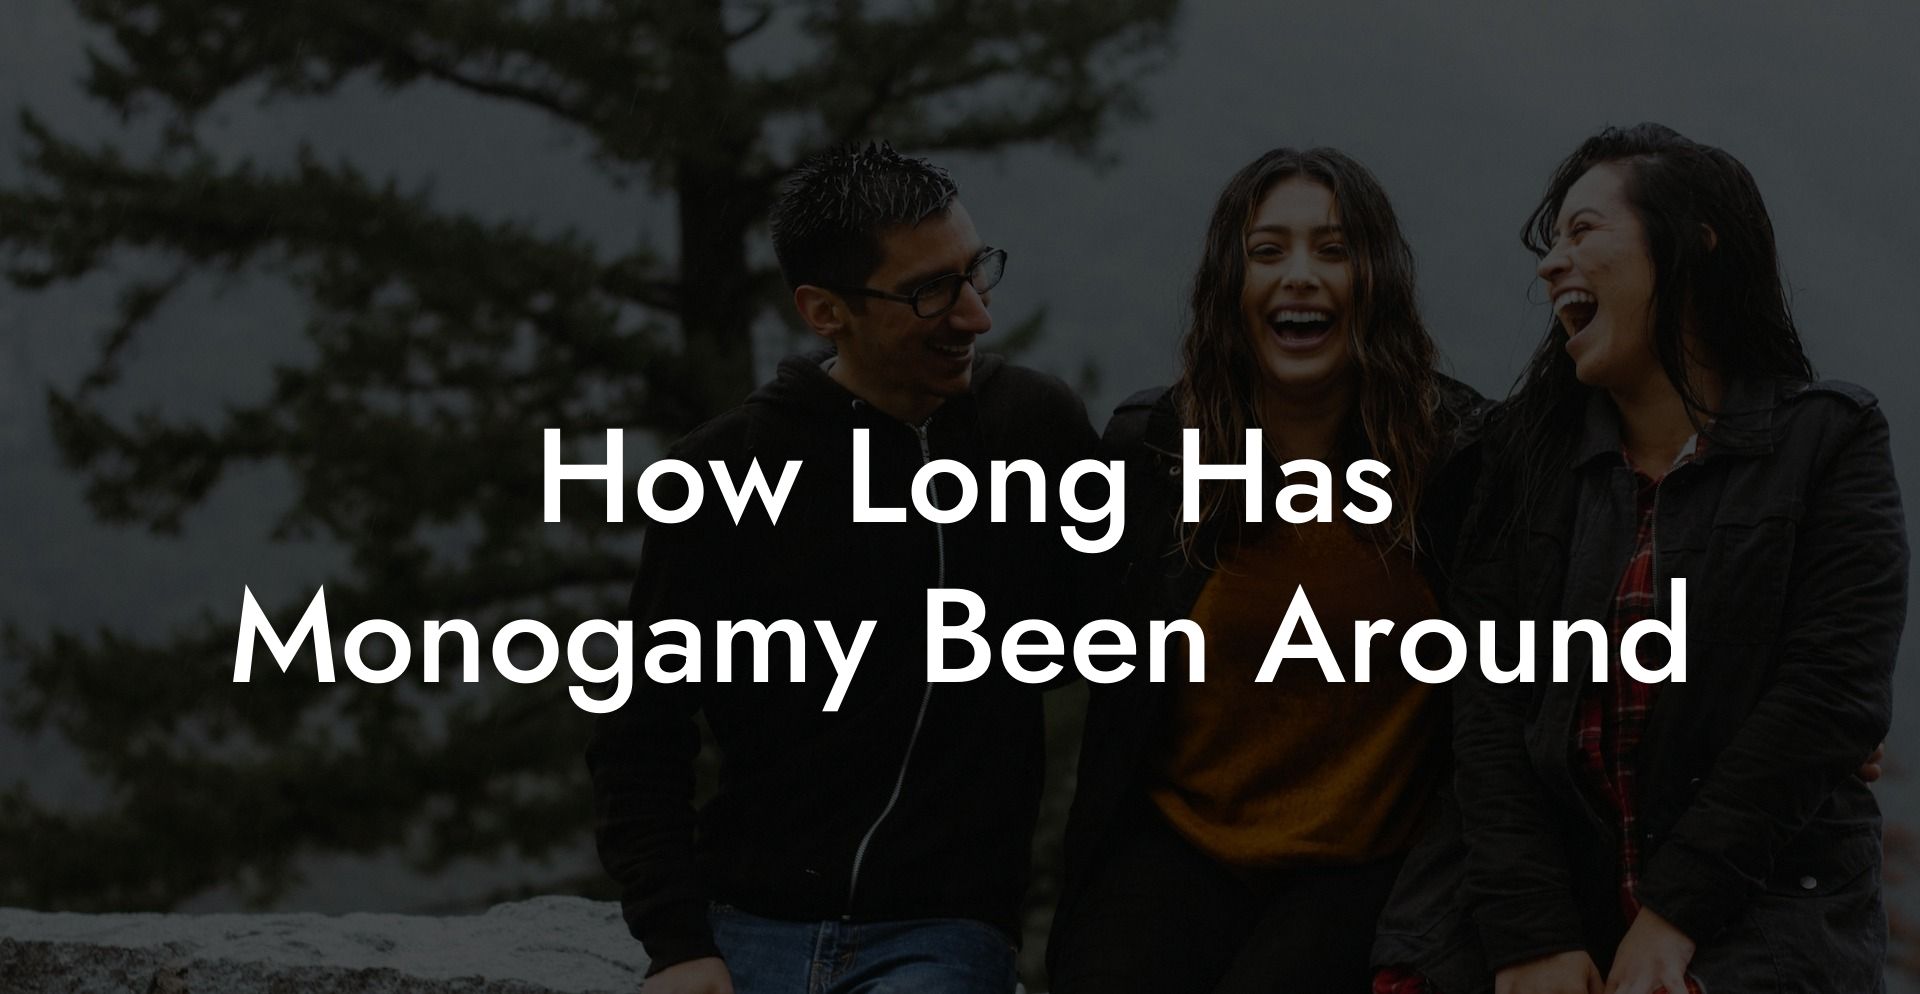 How Long Has Monogamy Been Around